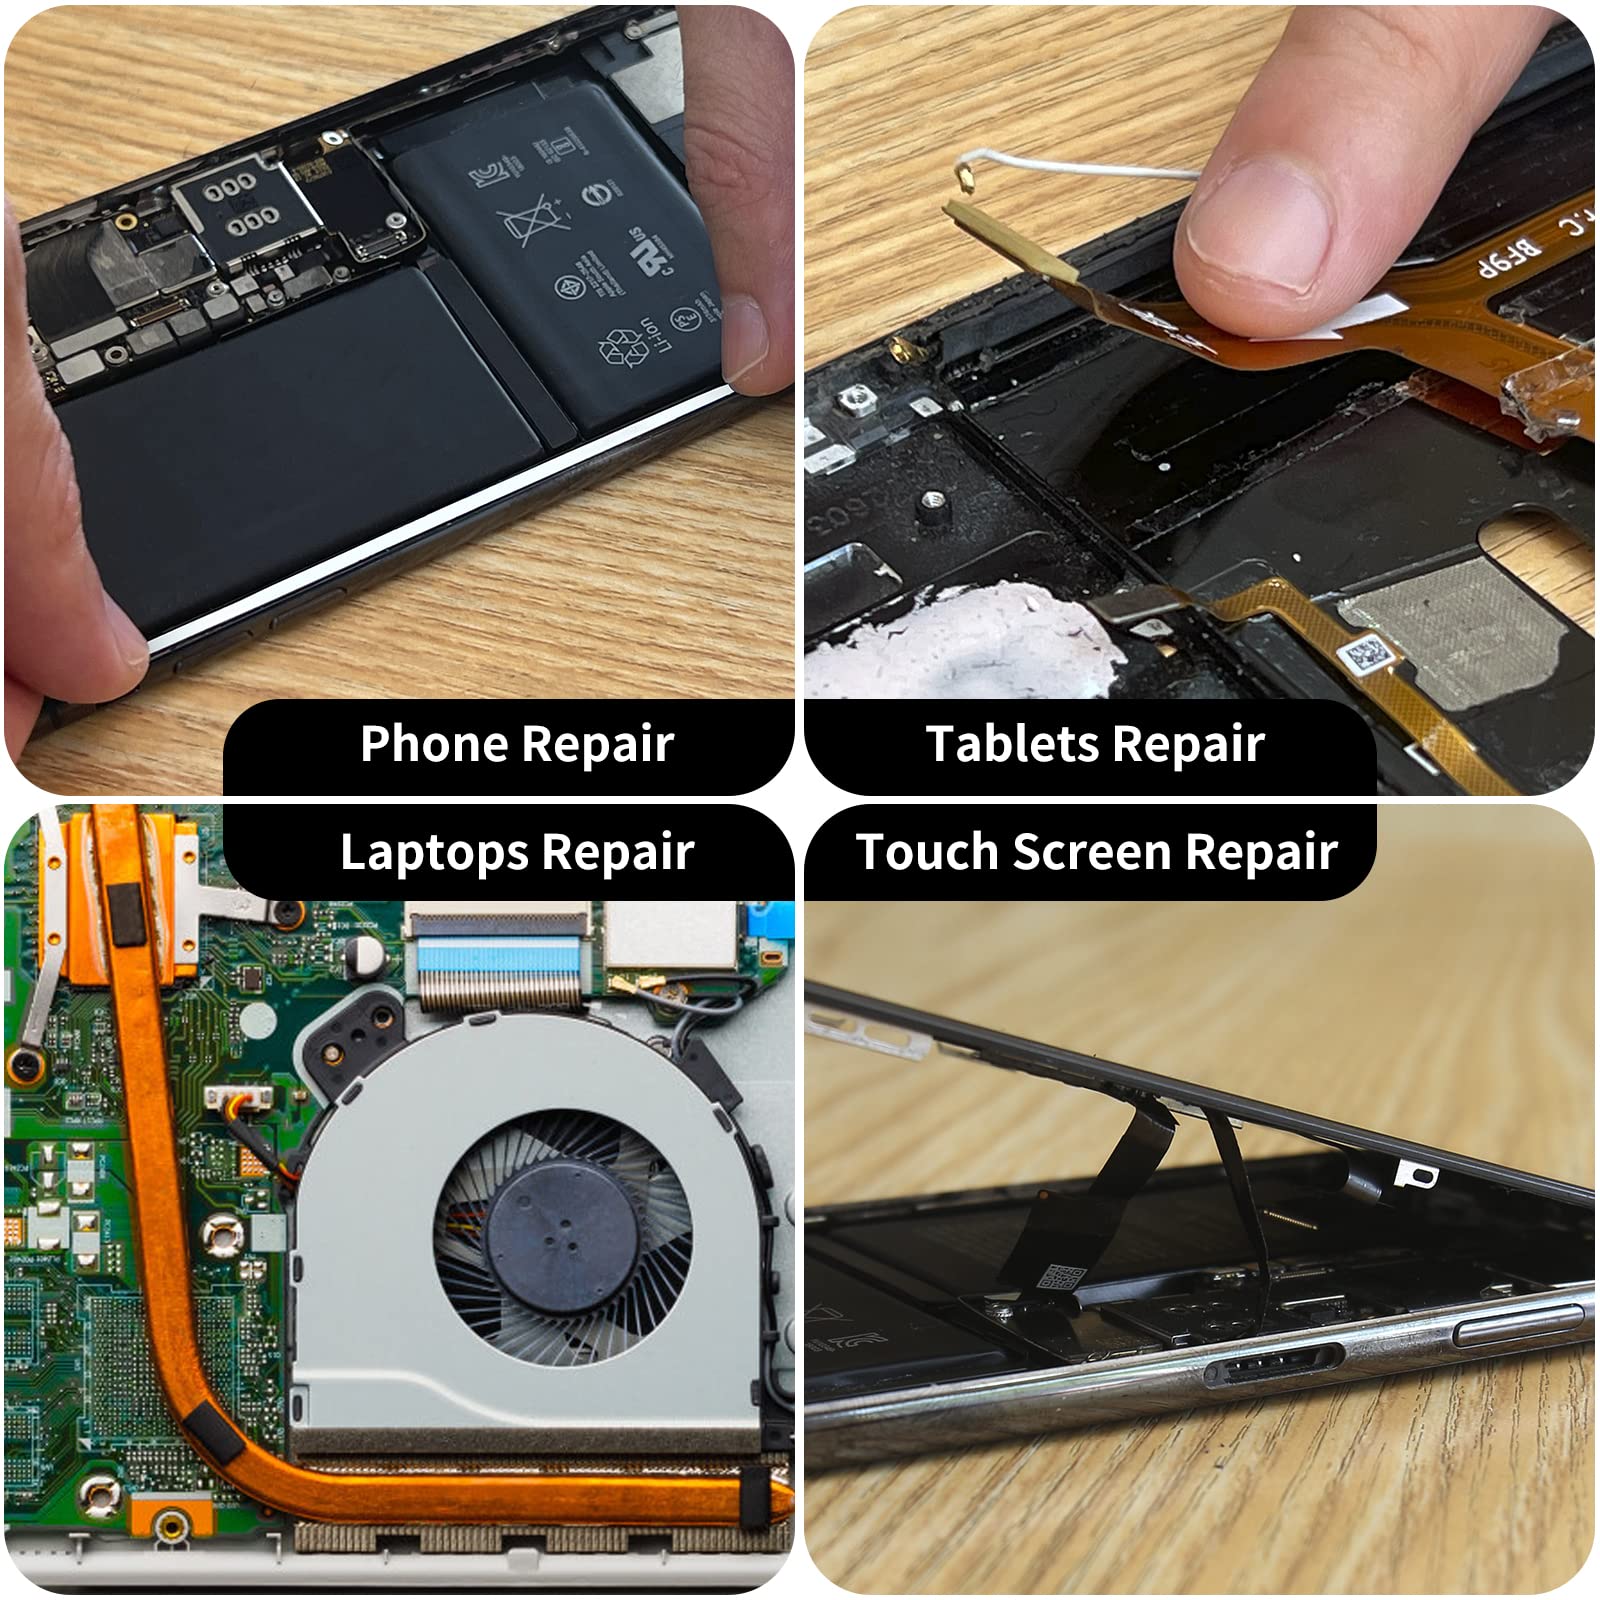 XUMAKI 2mm / 3mm x 50M LCD Repair Tape Phone Screen Adhesive Tape LCD Touch Screen Repair Tape with 1 Tweezers for Cell Phone, iPad, Tablets, Laptops, LCD Screen